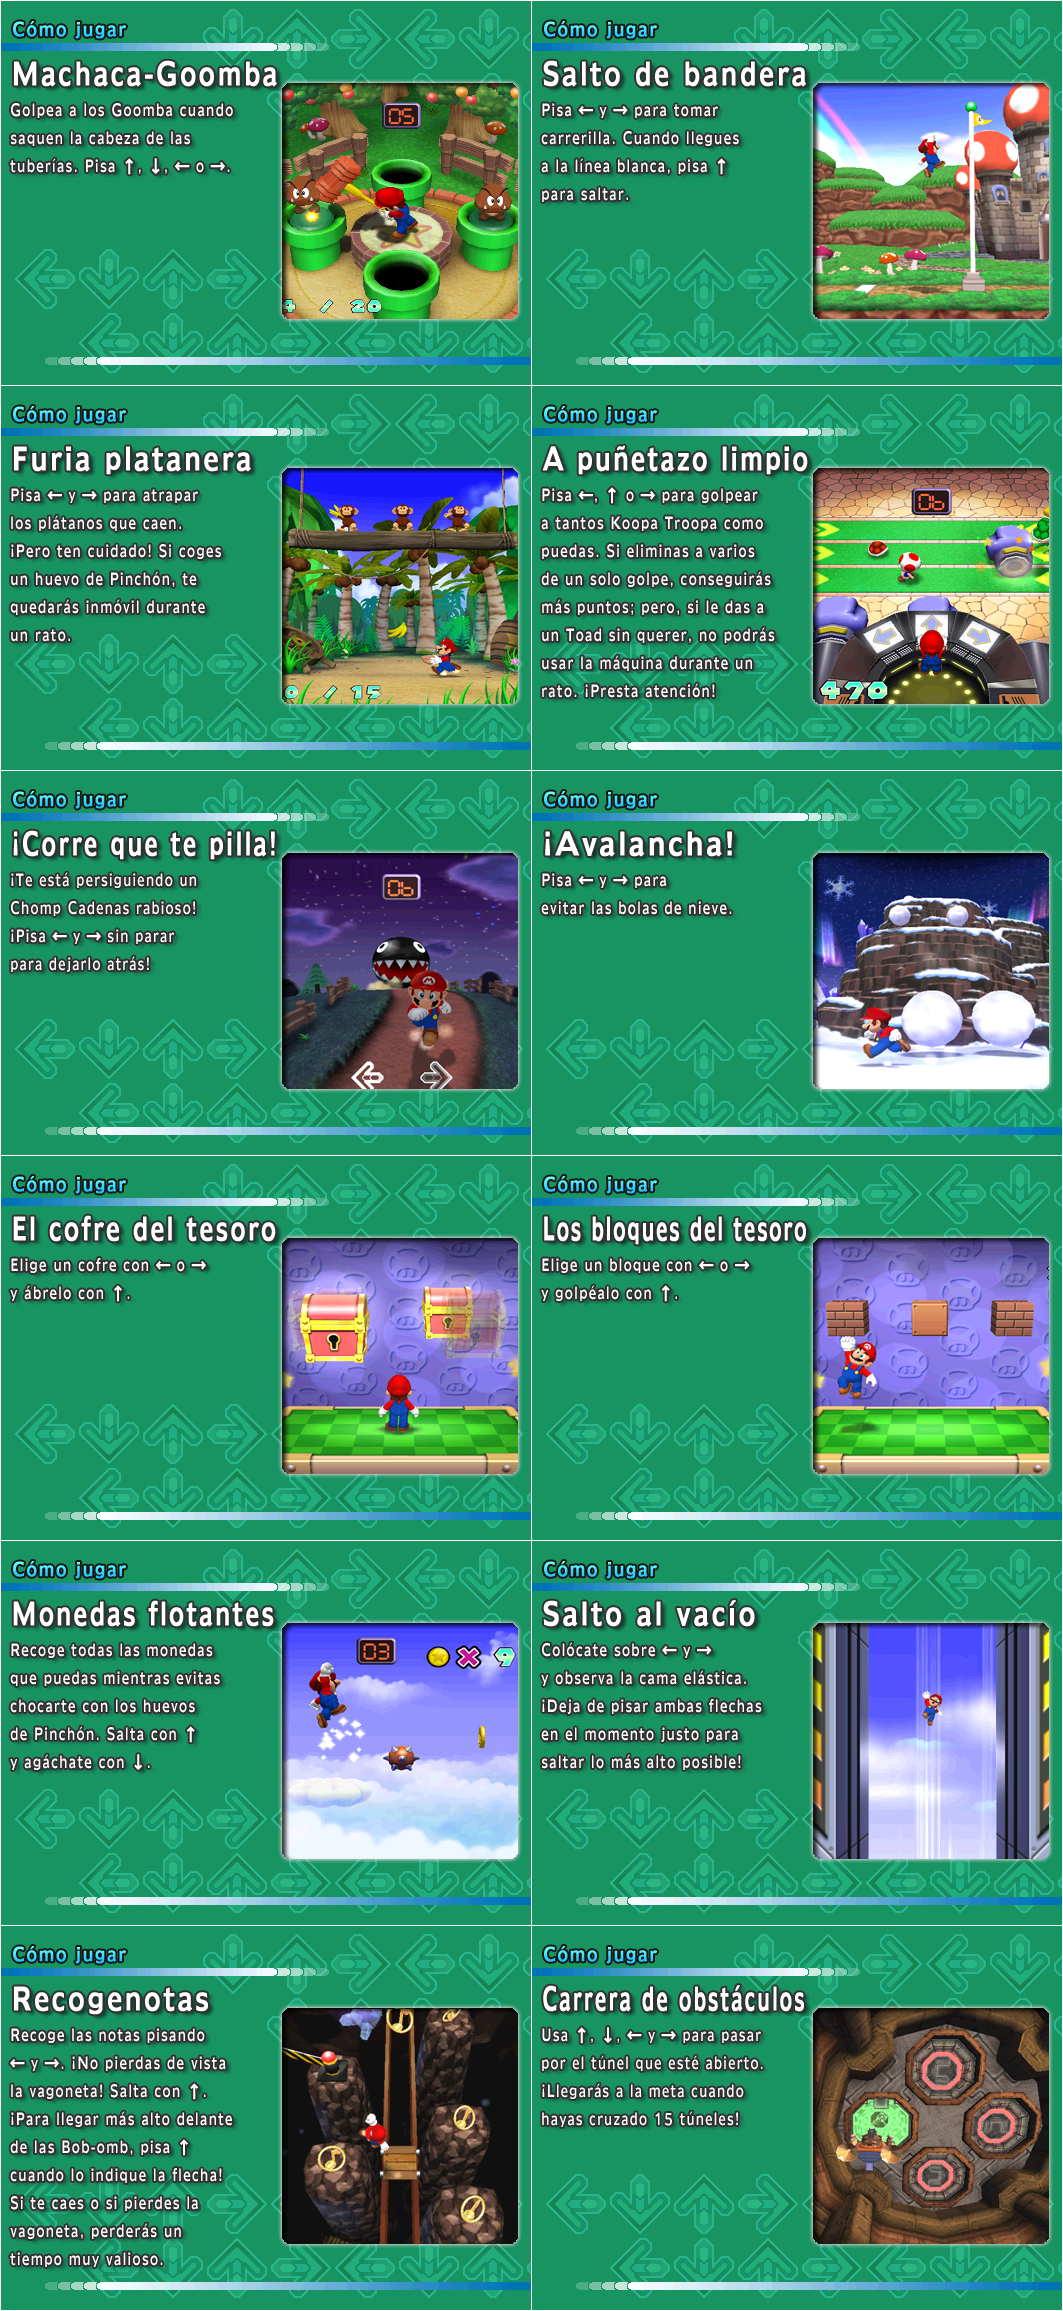 Dance Dance Revolution: Mario Mix - Minigame Instructions (Spanish)